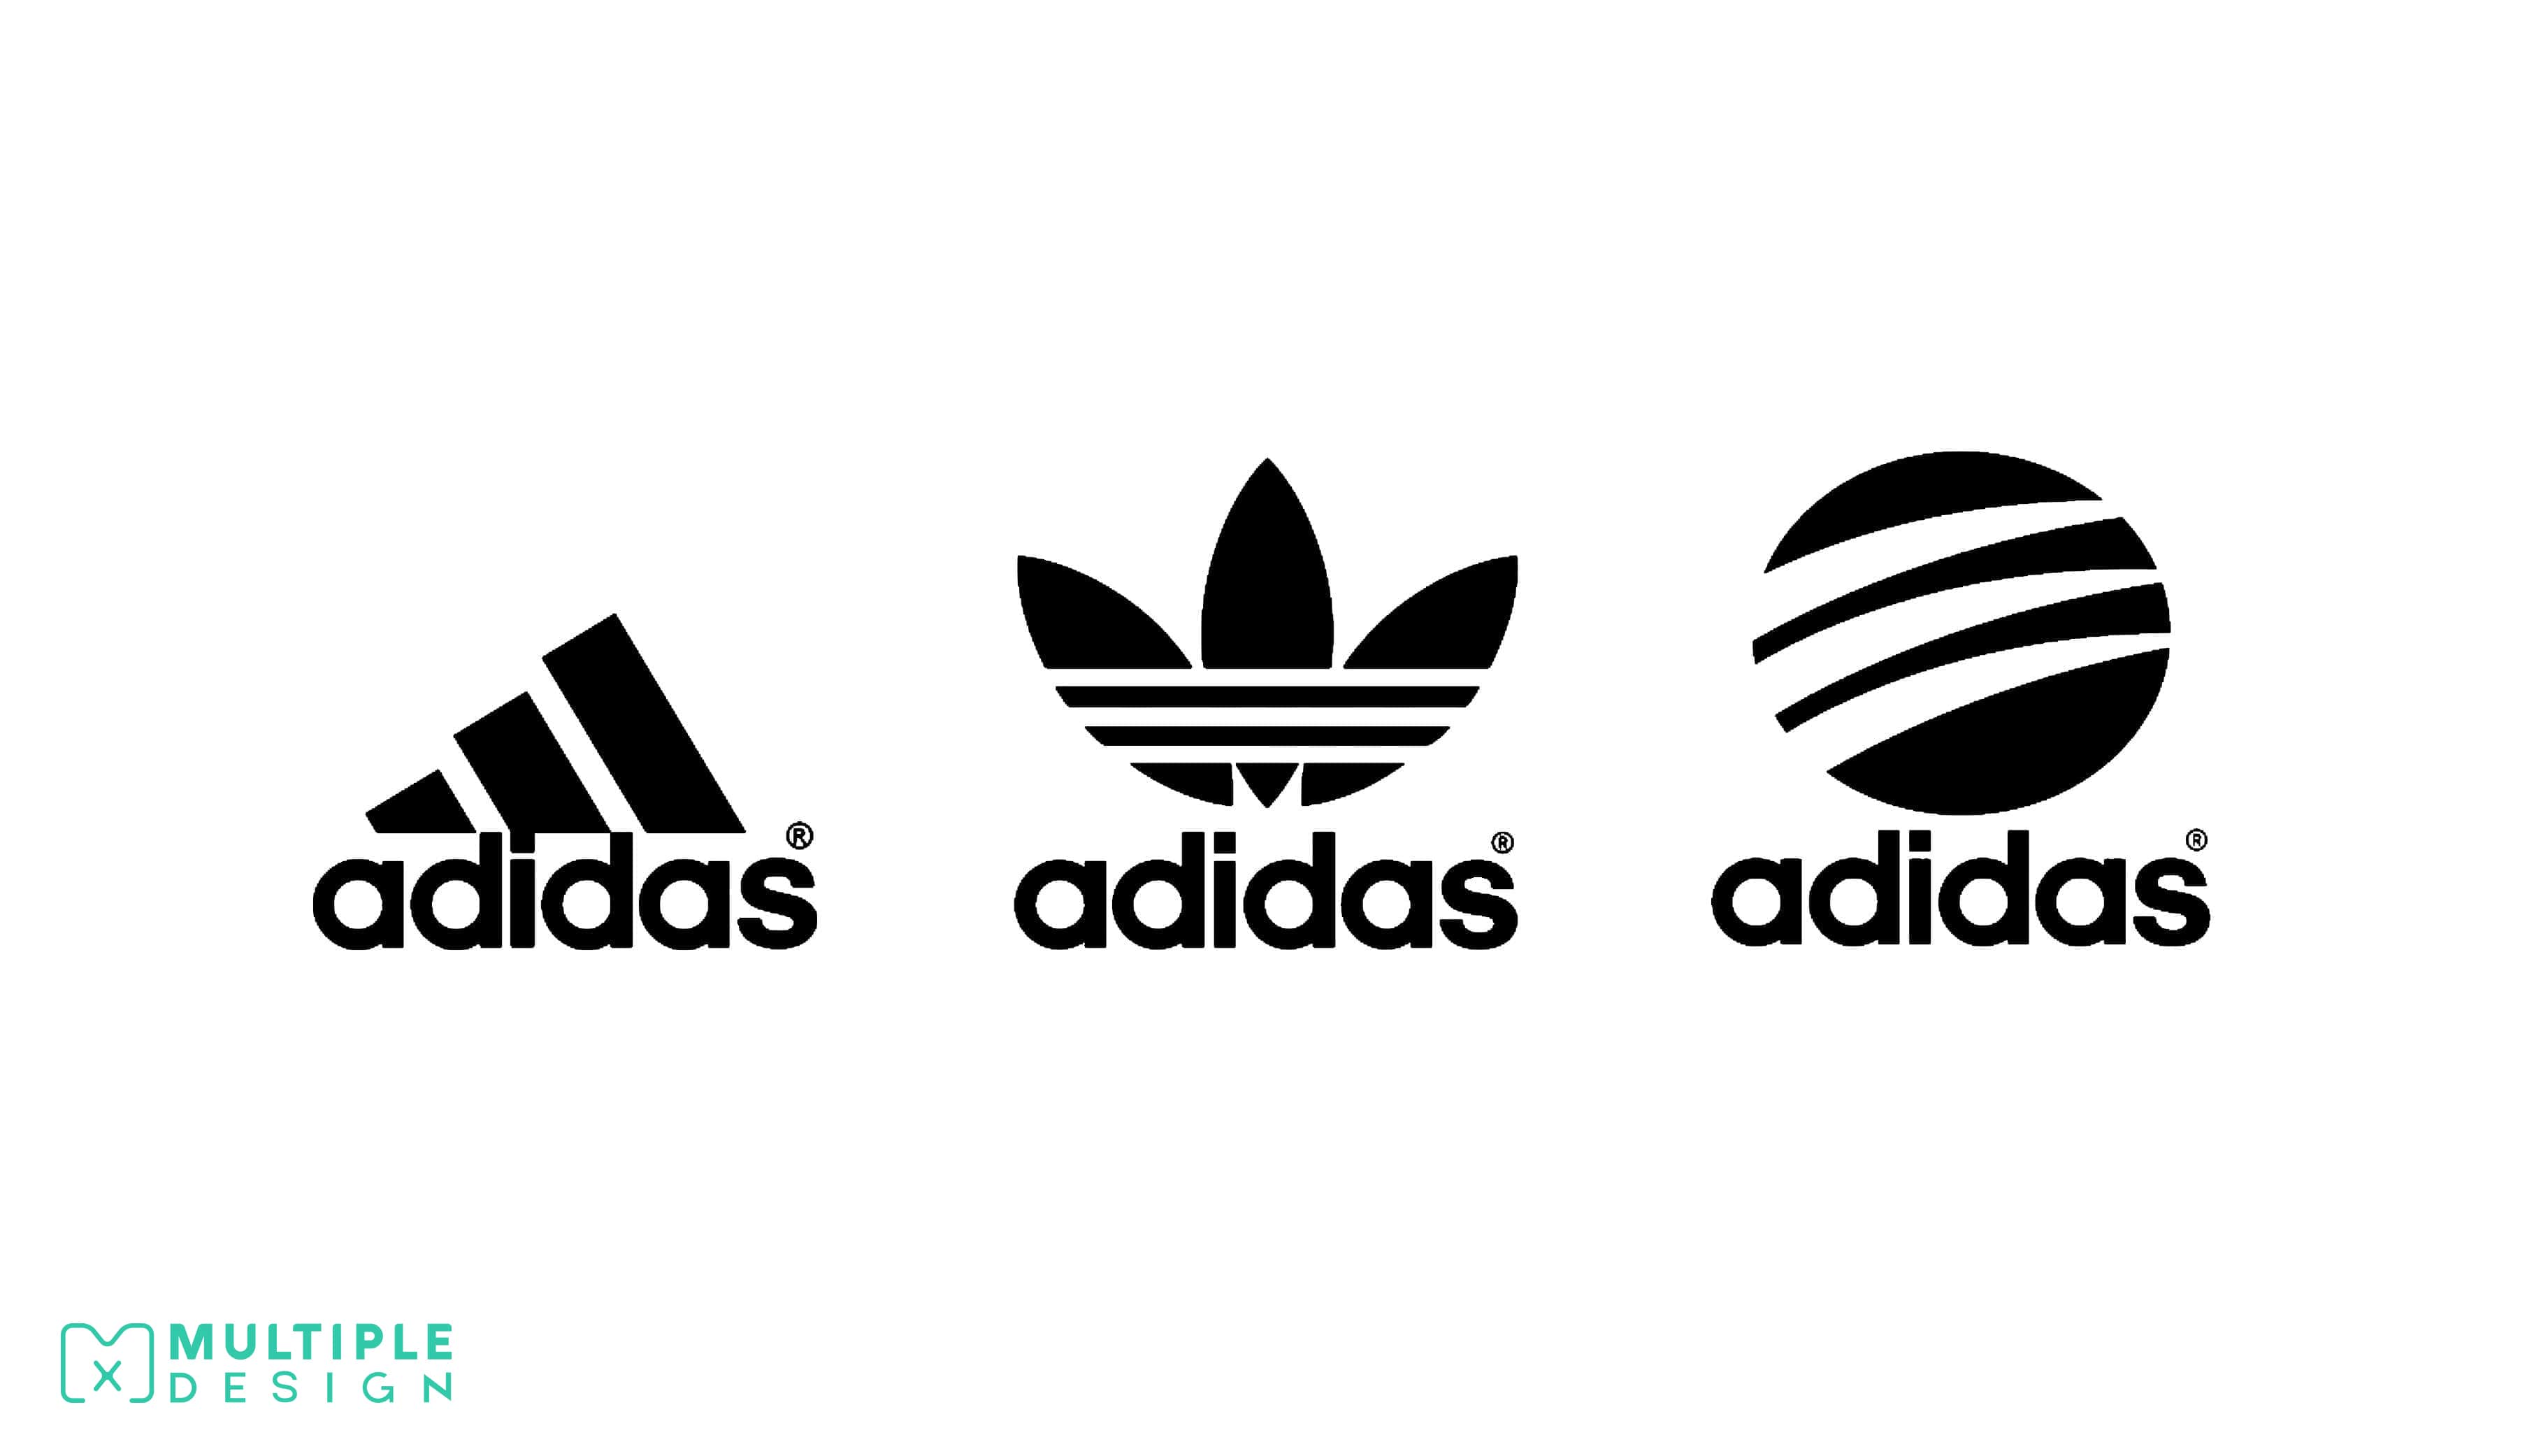 adidas three logos